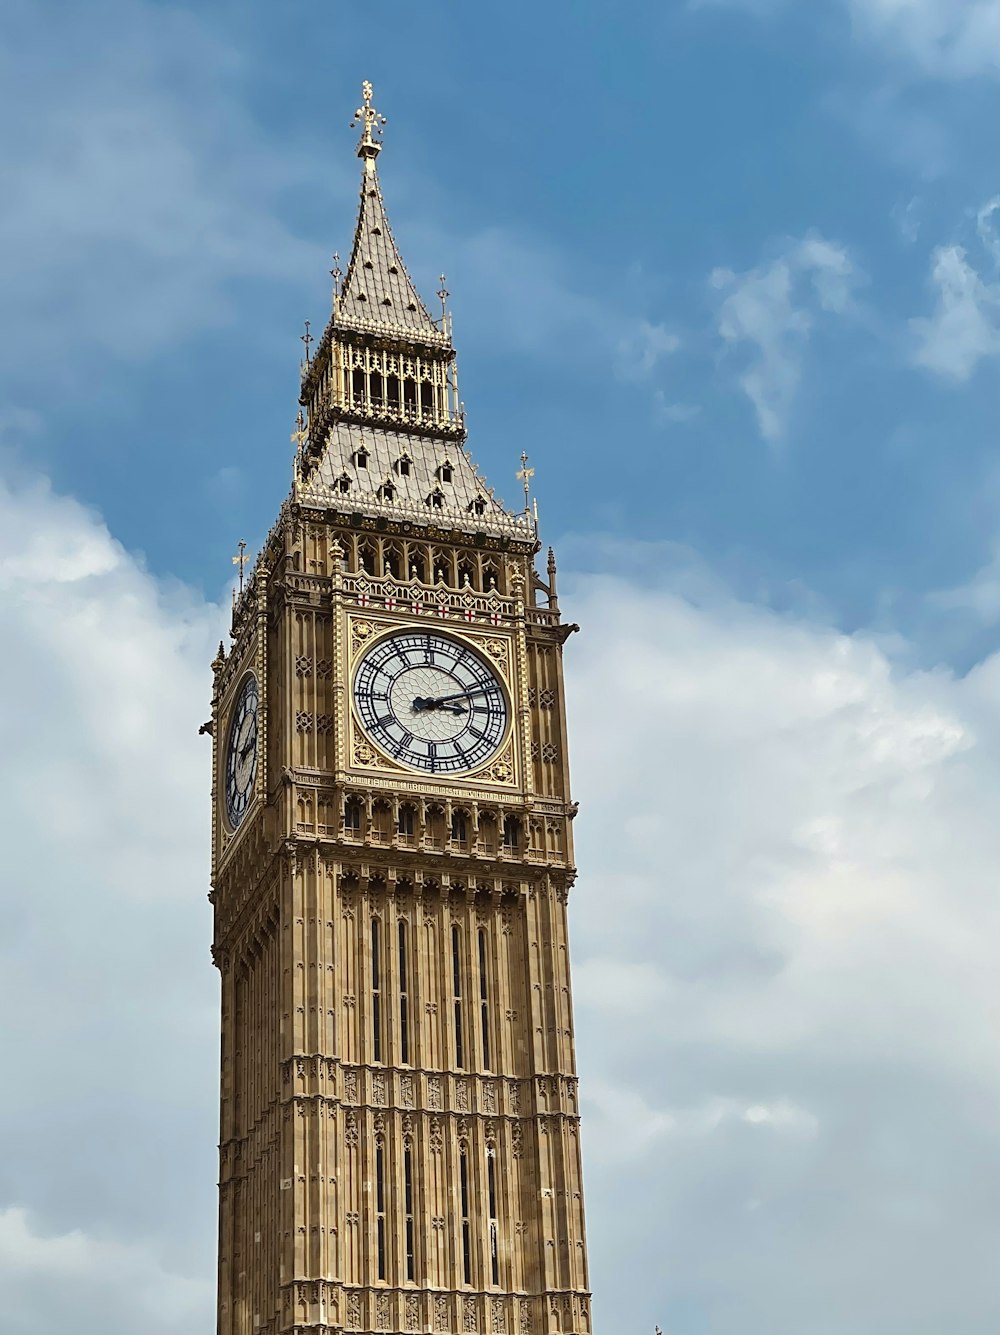 a large clock on Big Ben